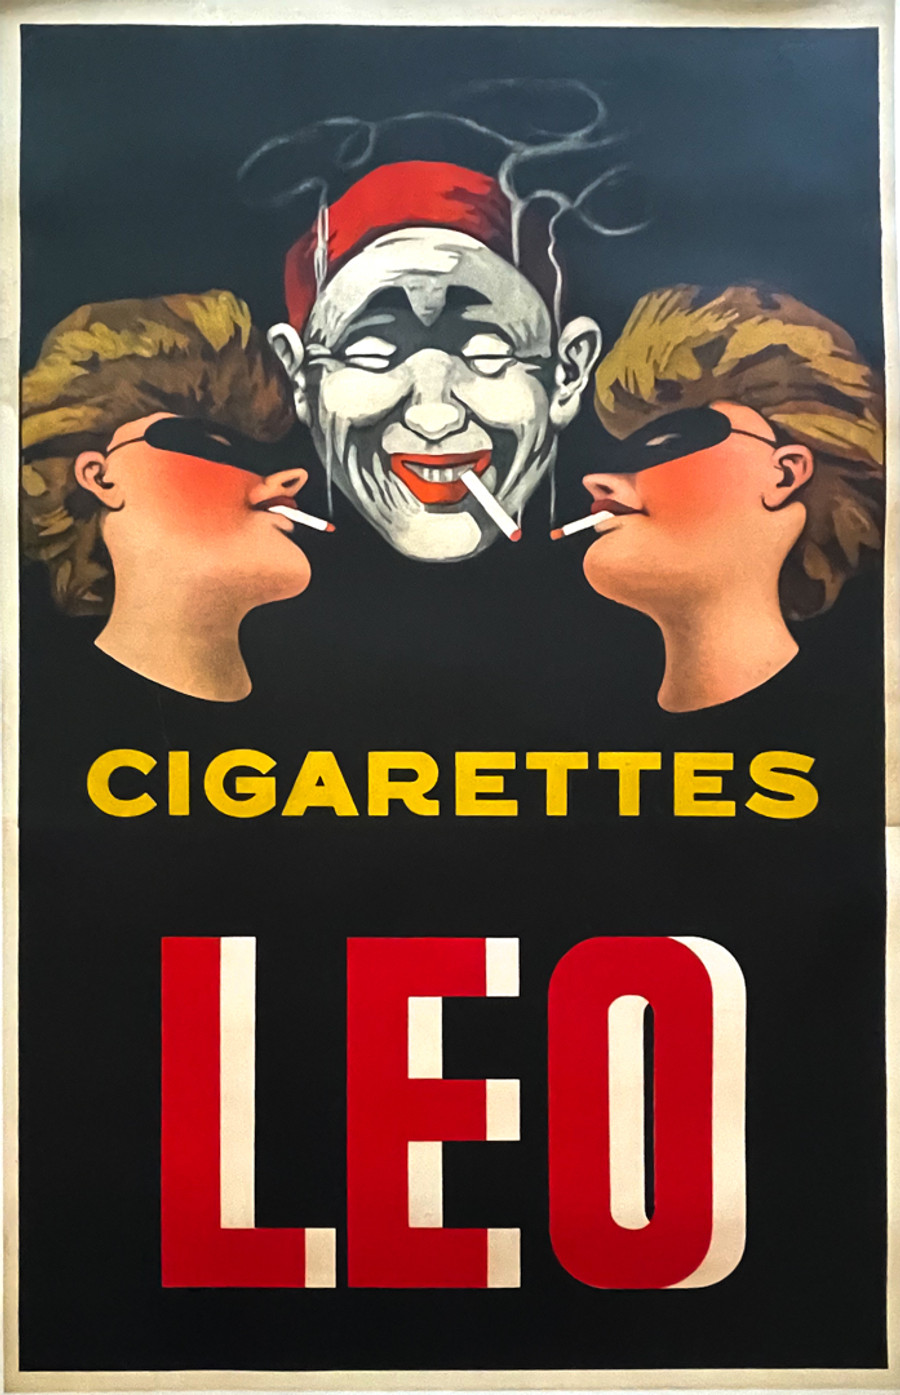 Cigarettes Leo by De Rocker, original antique Belgian poster. Features clown and masked figures smoking.